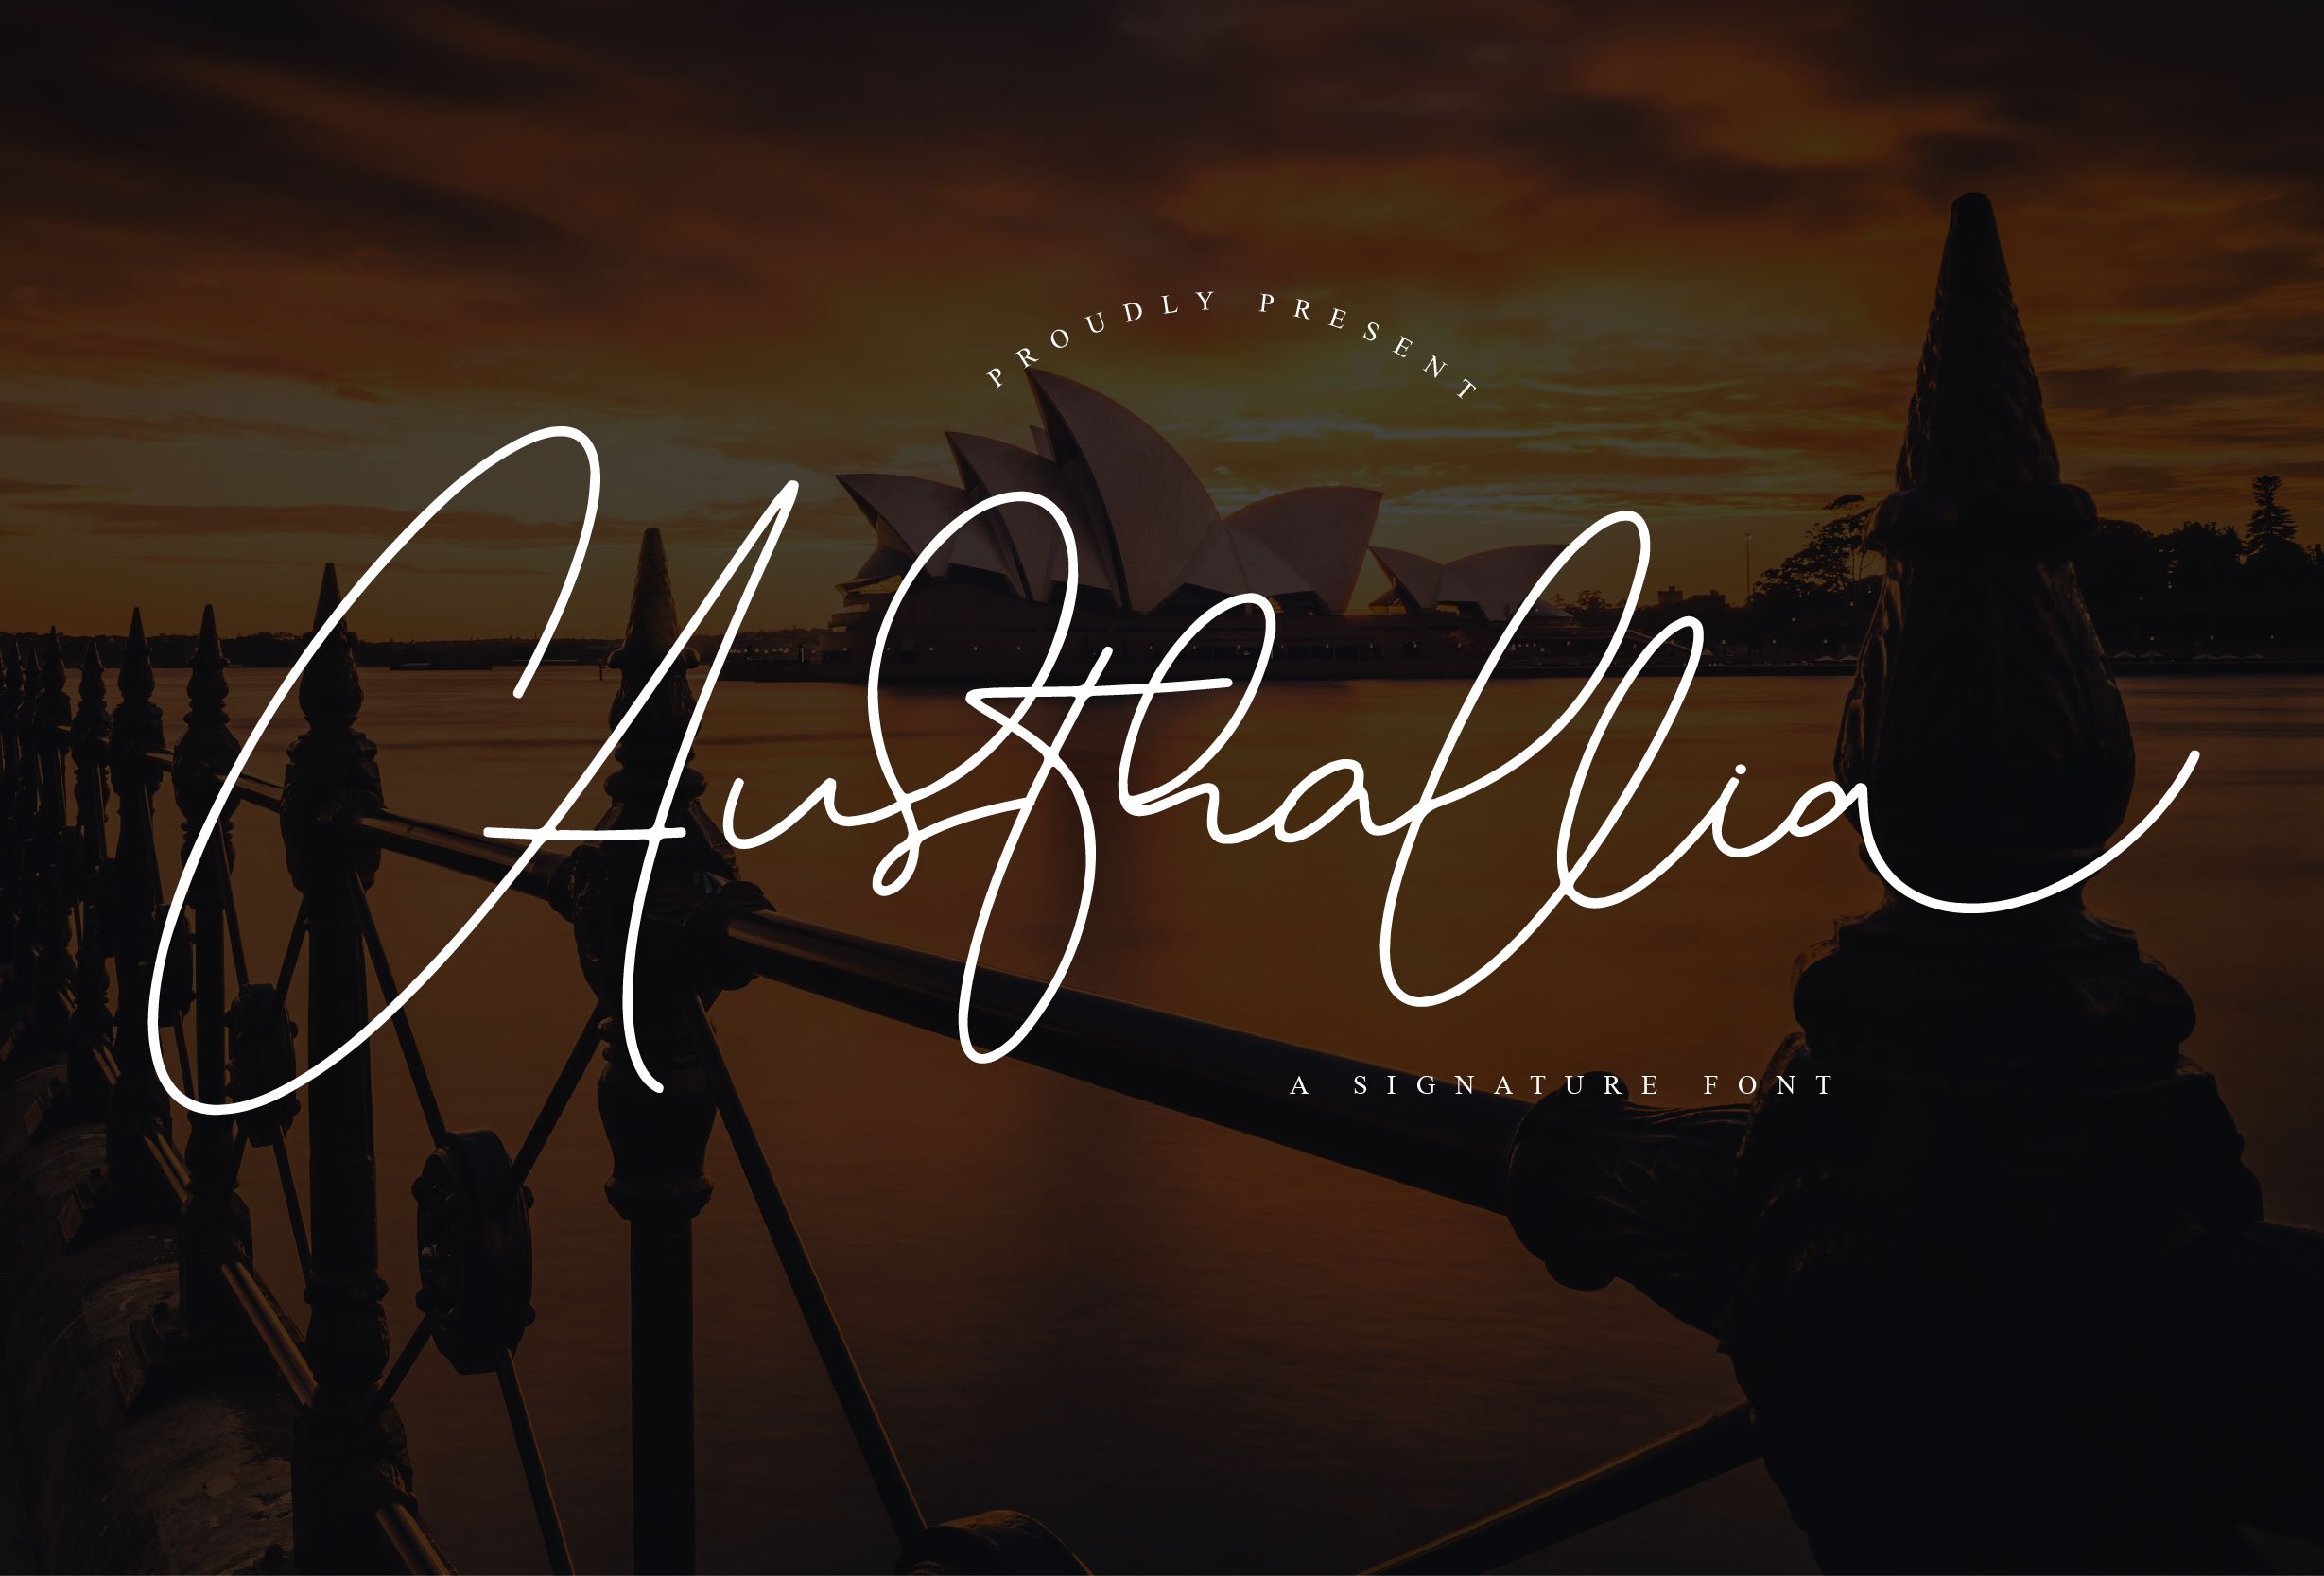 Australlia - a signature fontcover image.